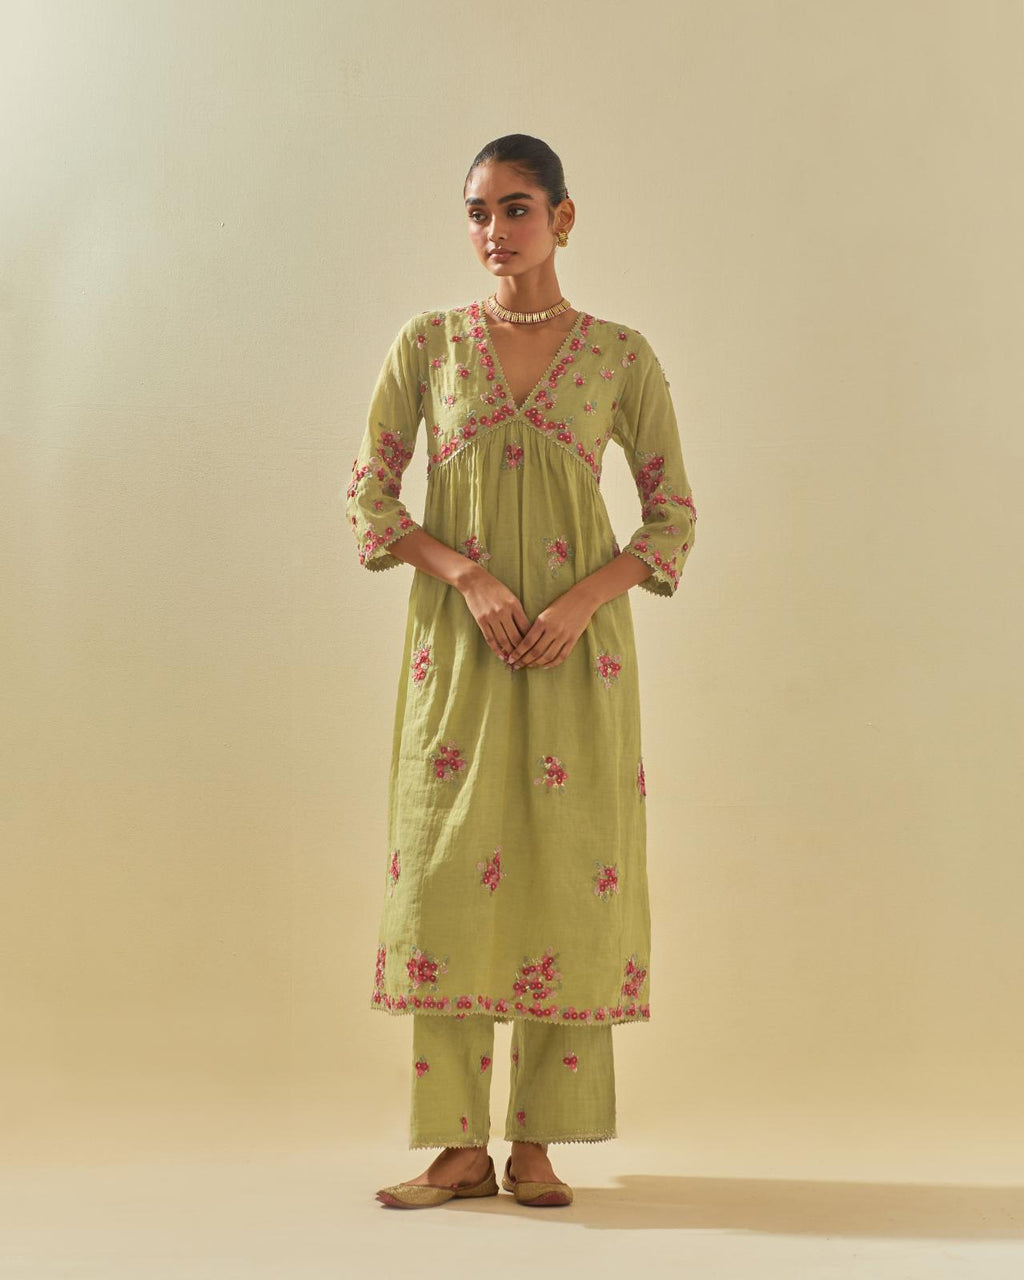 Green tissue chanderi hand cut silk flower embroidered kurta dress set with fine gathers at empire line.